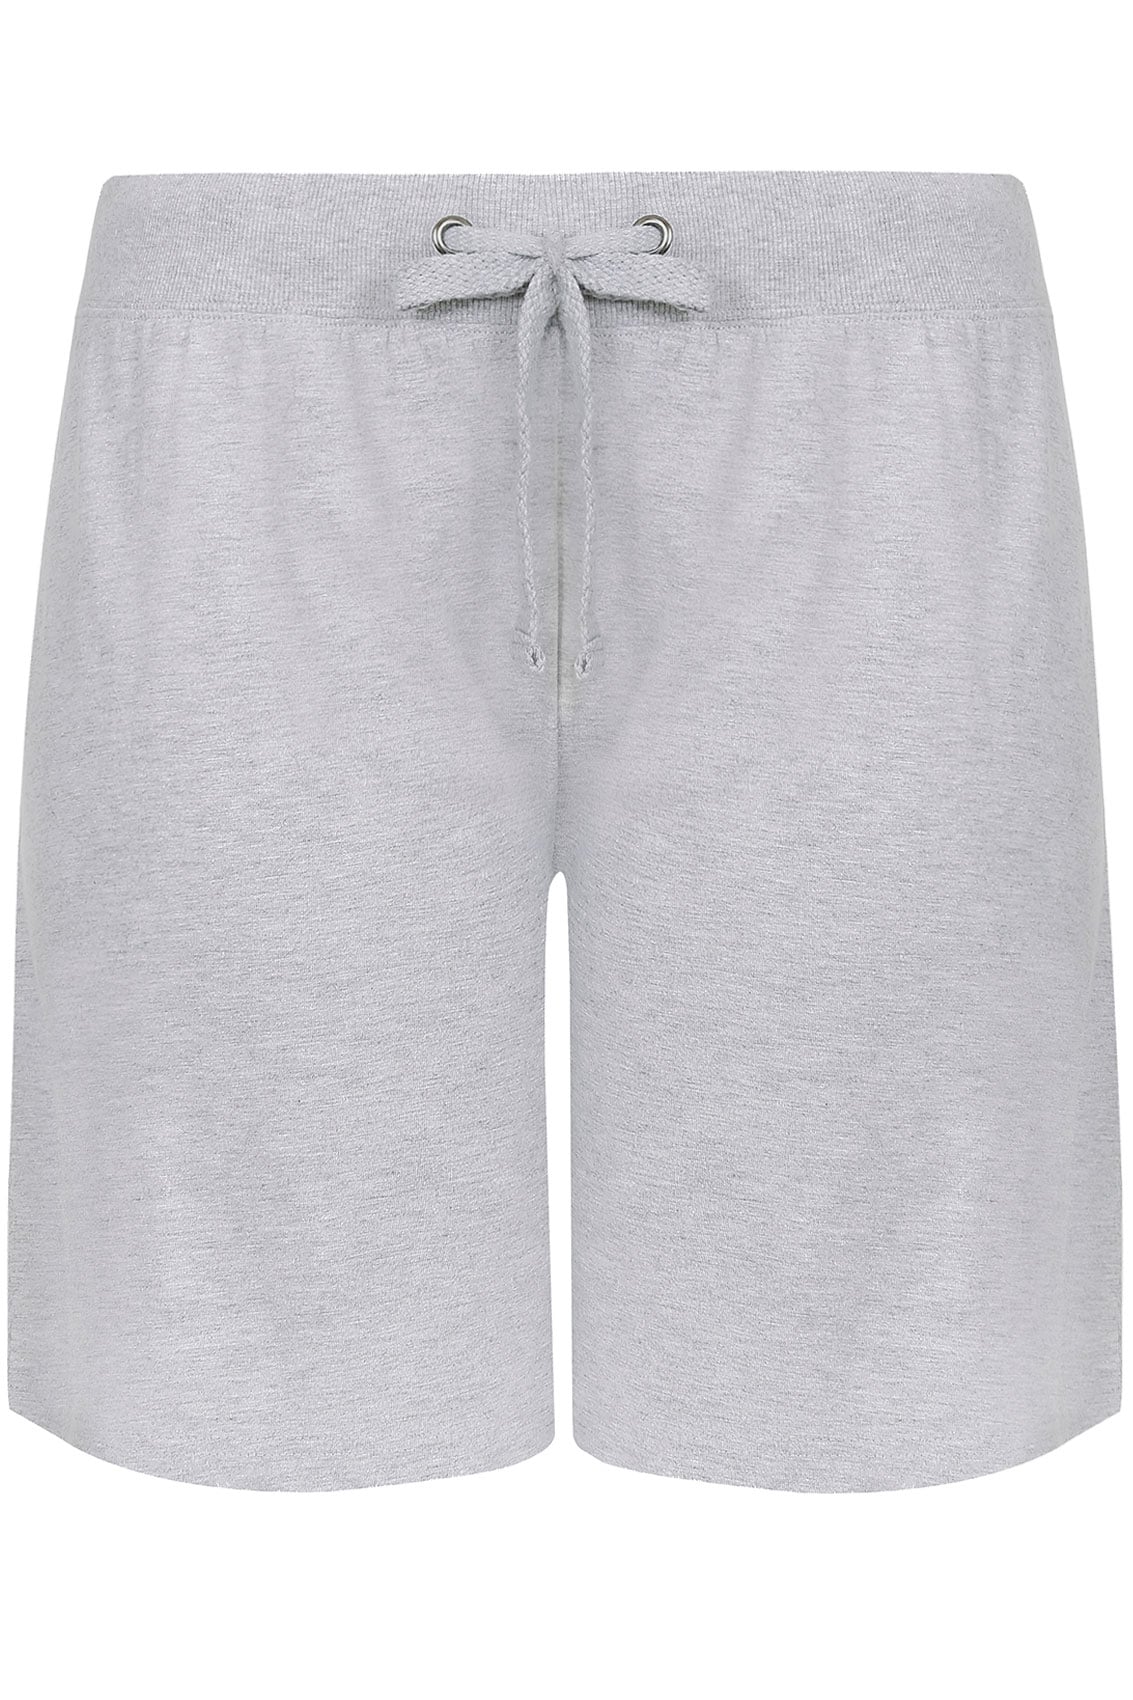 Grey Jogger Shorts, Plus size 16 to 36